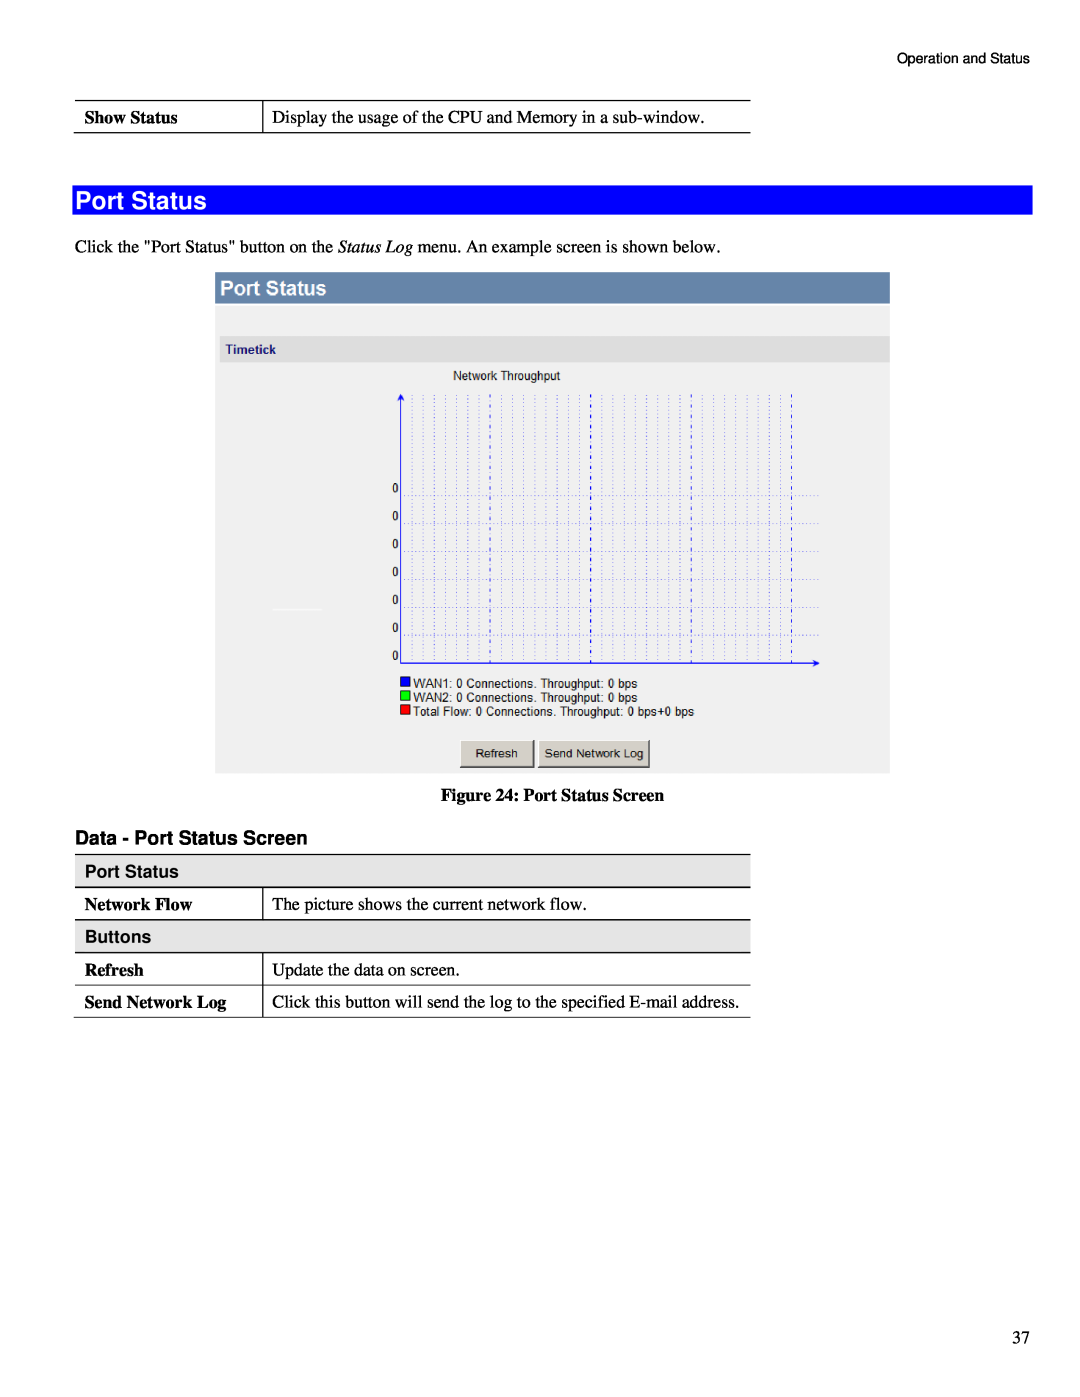 TRENDnet TW100-BRV324 manual Data - Port Status Screen, Buttons 